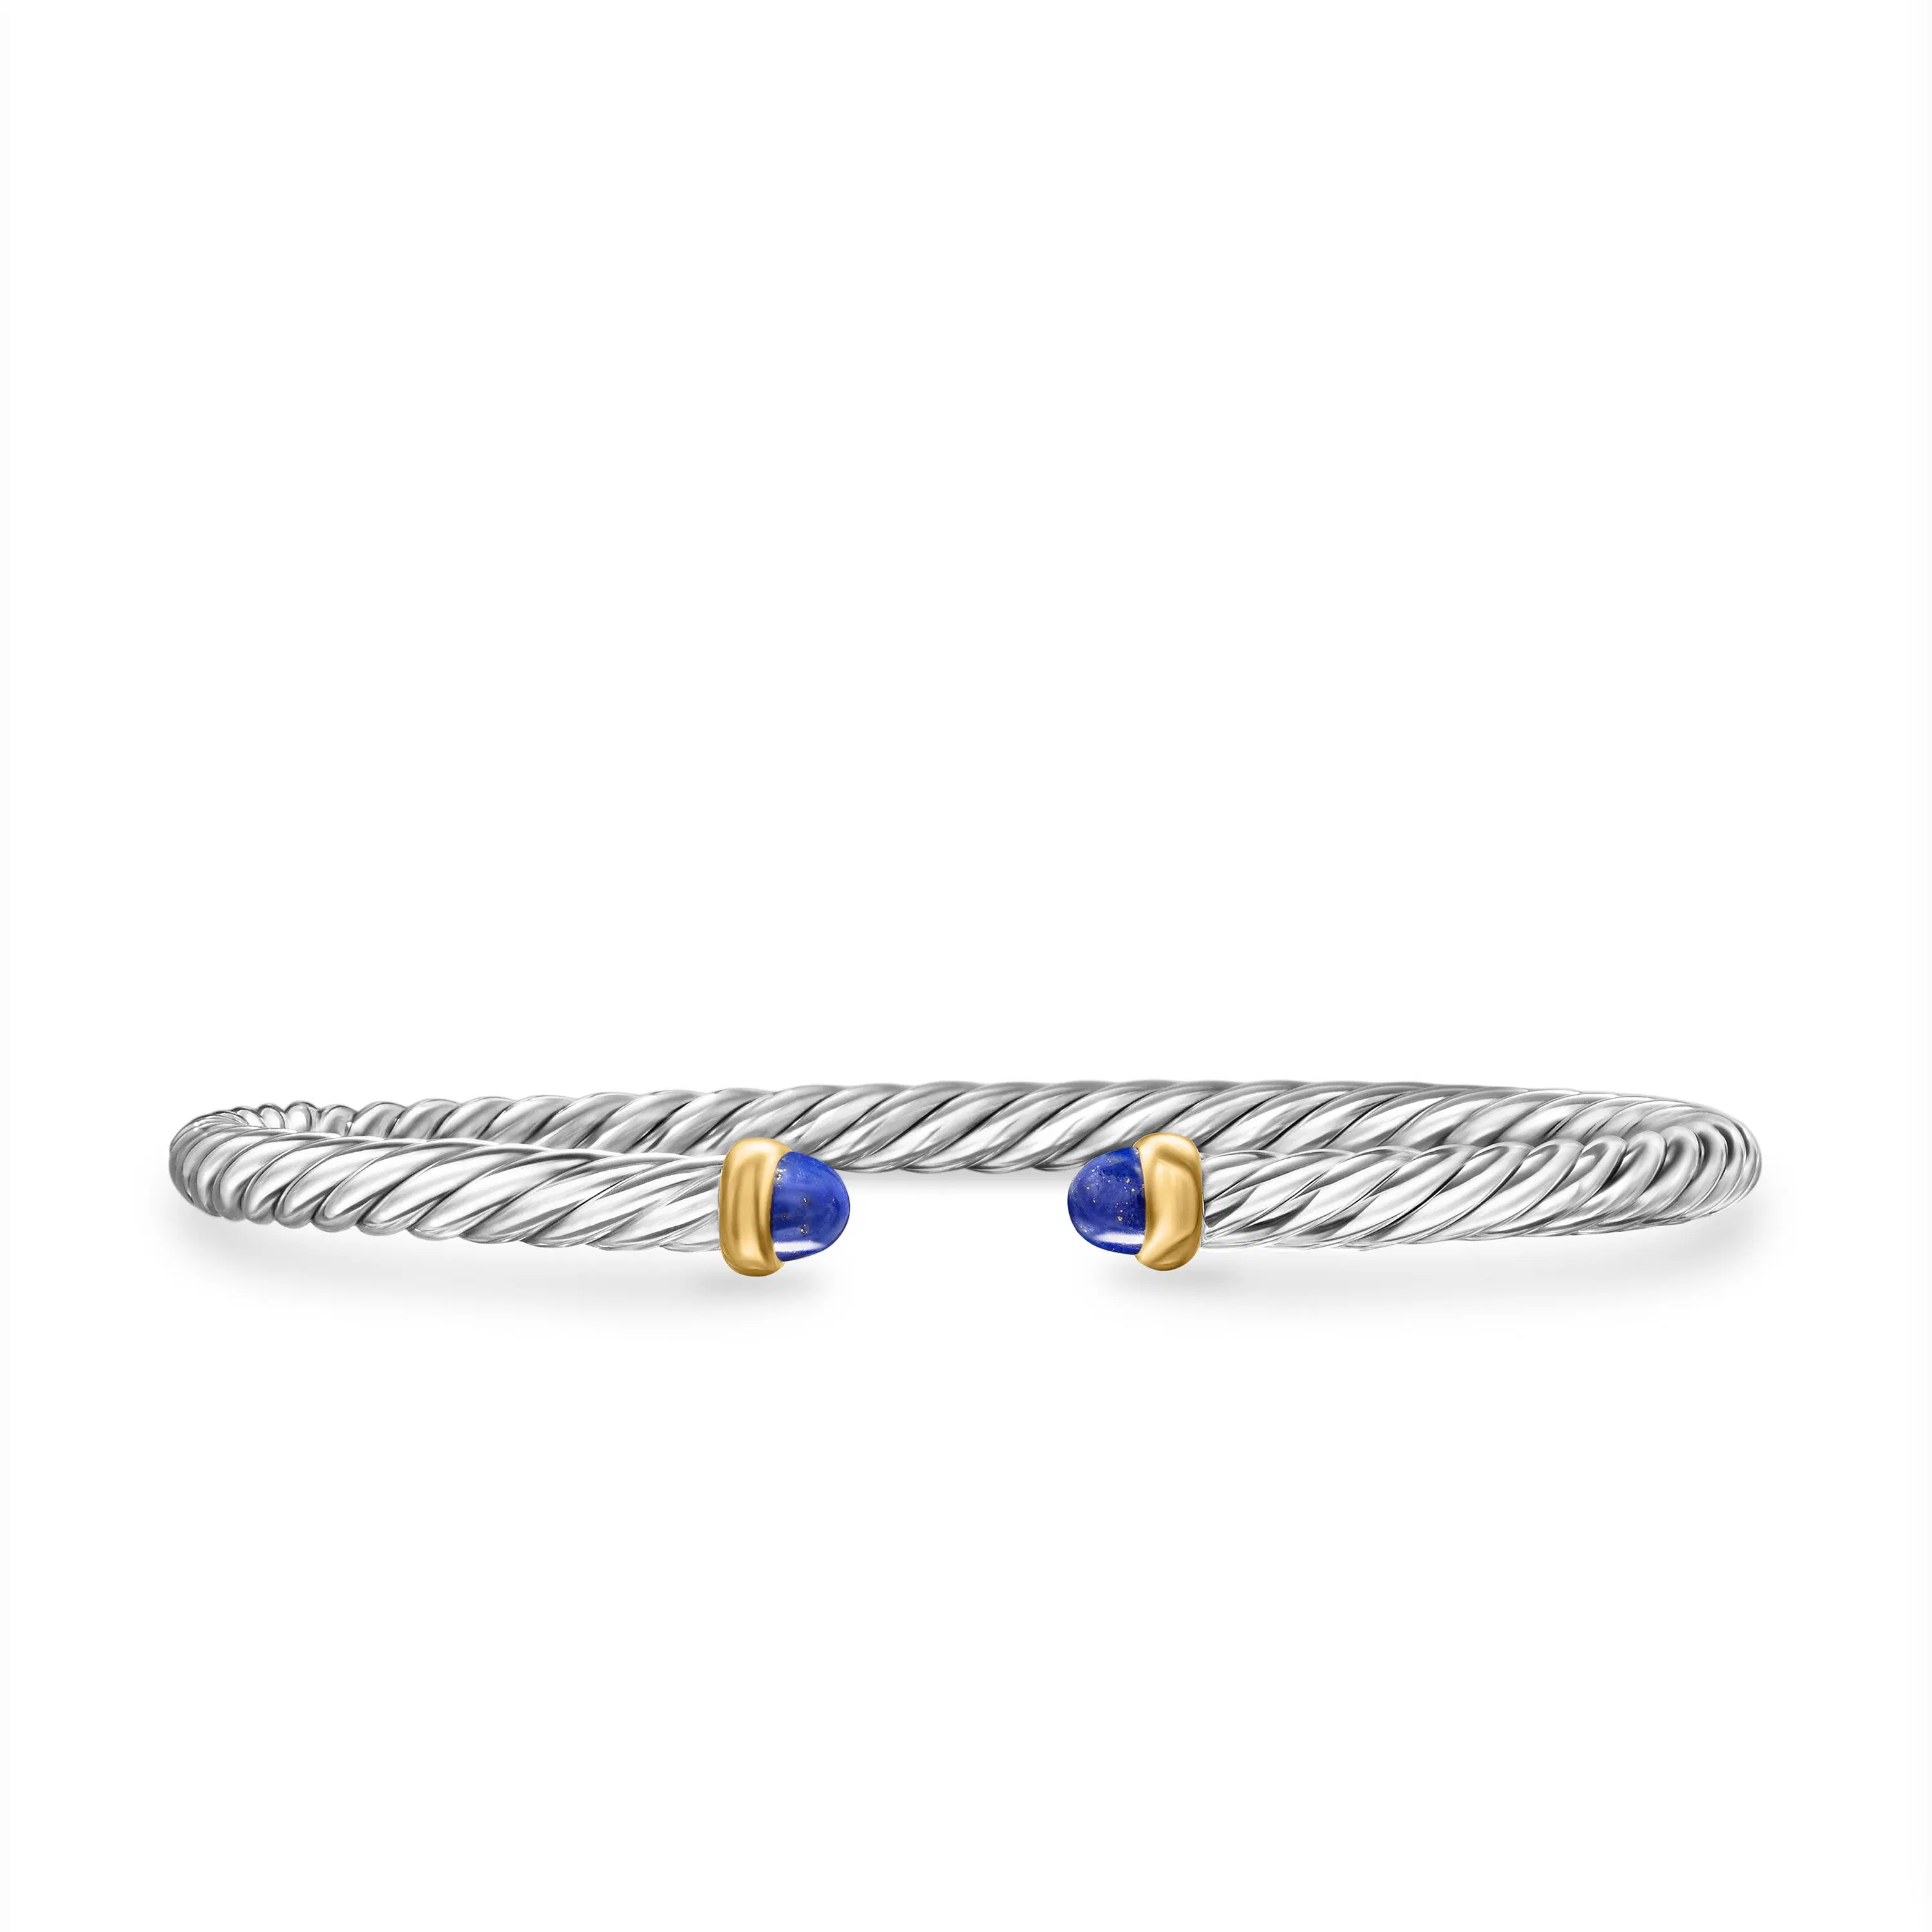 David Yurman Cable Flex Sterling Silver Bracelet with Lapis, Size Large